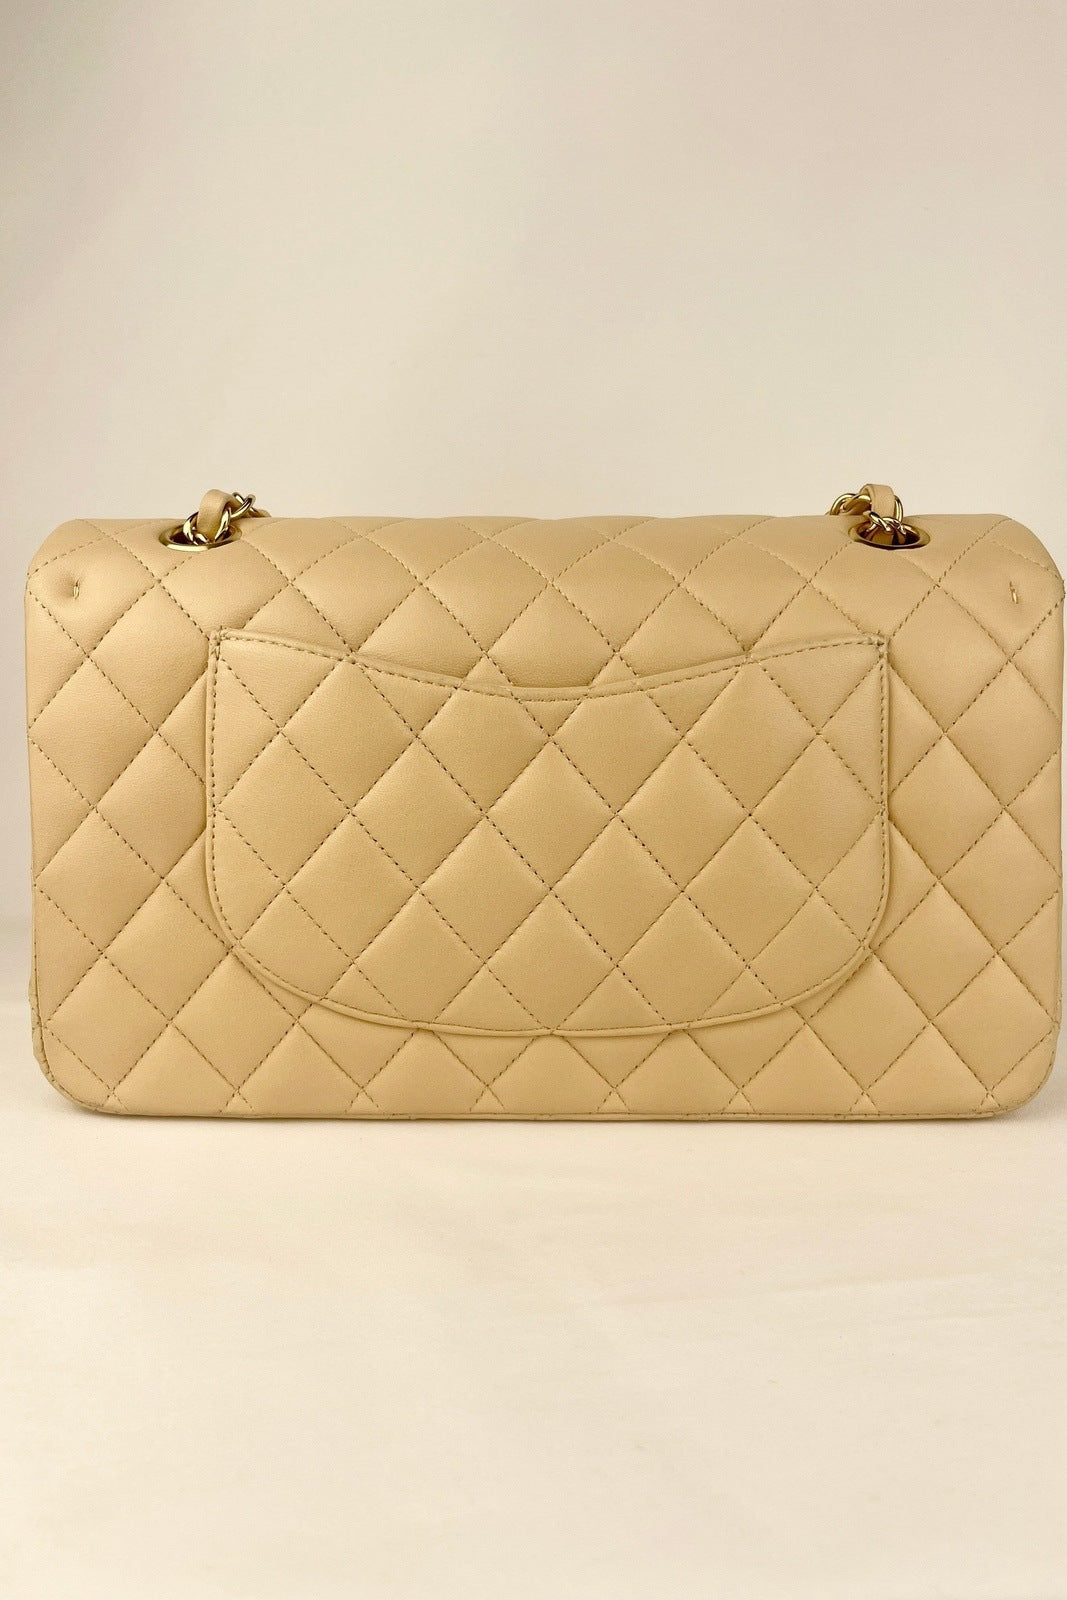 Chanel Beige Lambskin Leather Medium Classic Double Flap 2009